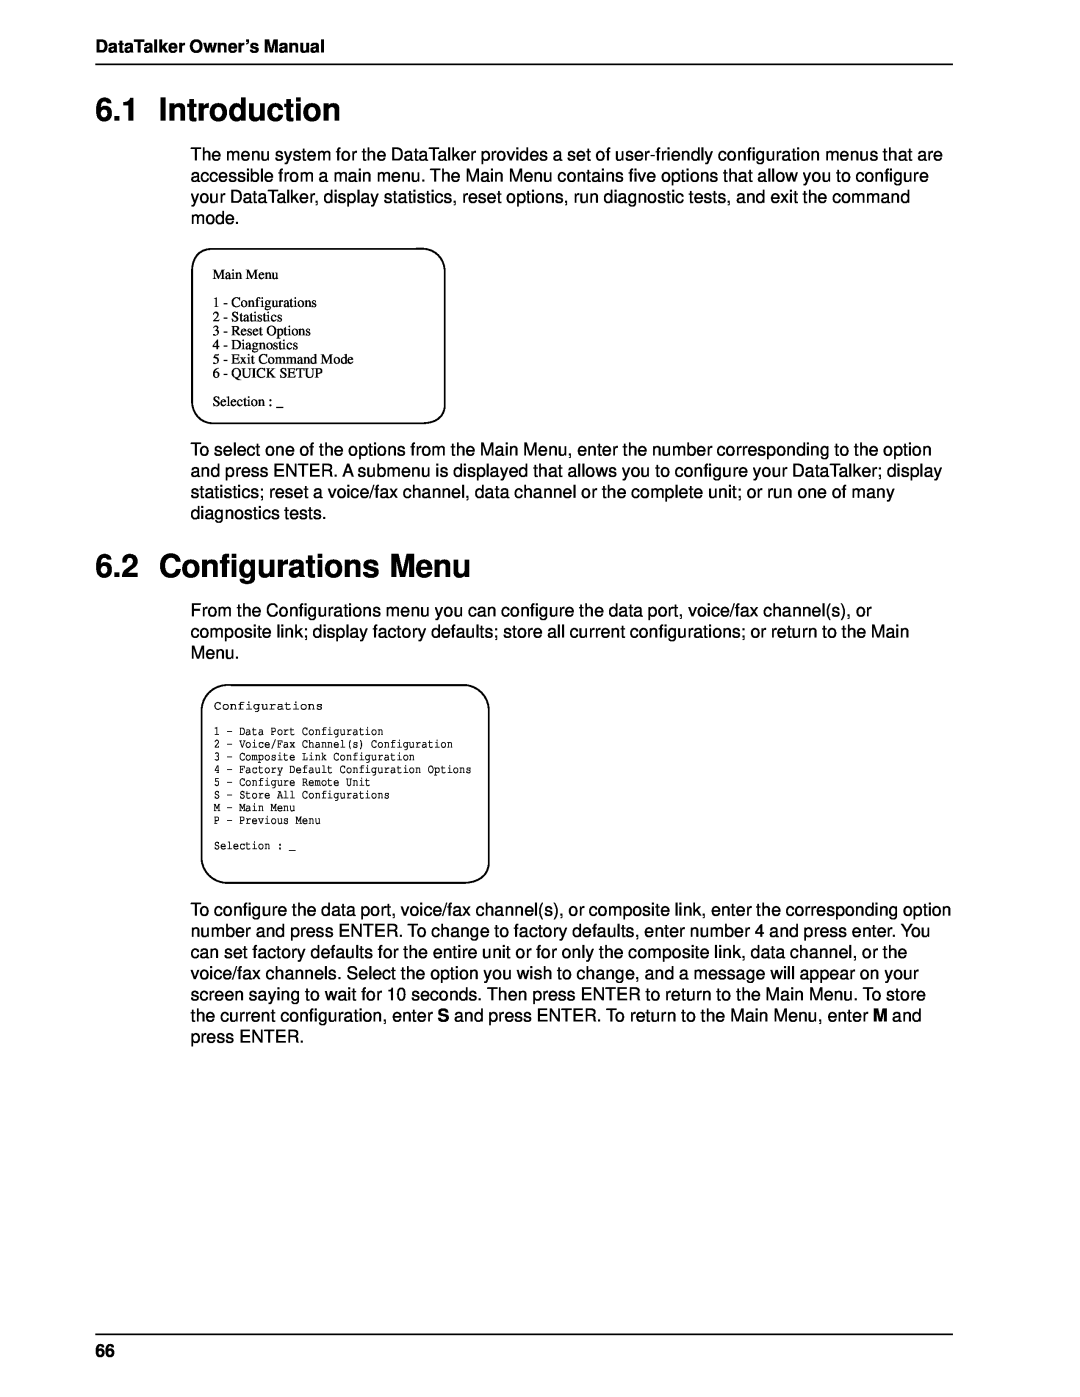 Multi-Tech Systems DT101/xx, DT102/xx owner manual Introduction, Configurations Menu 